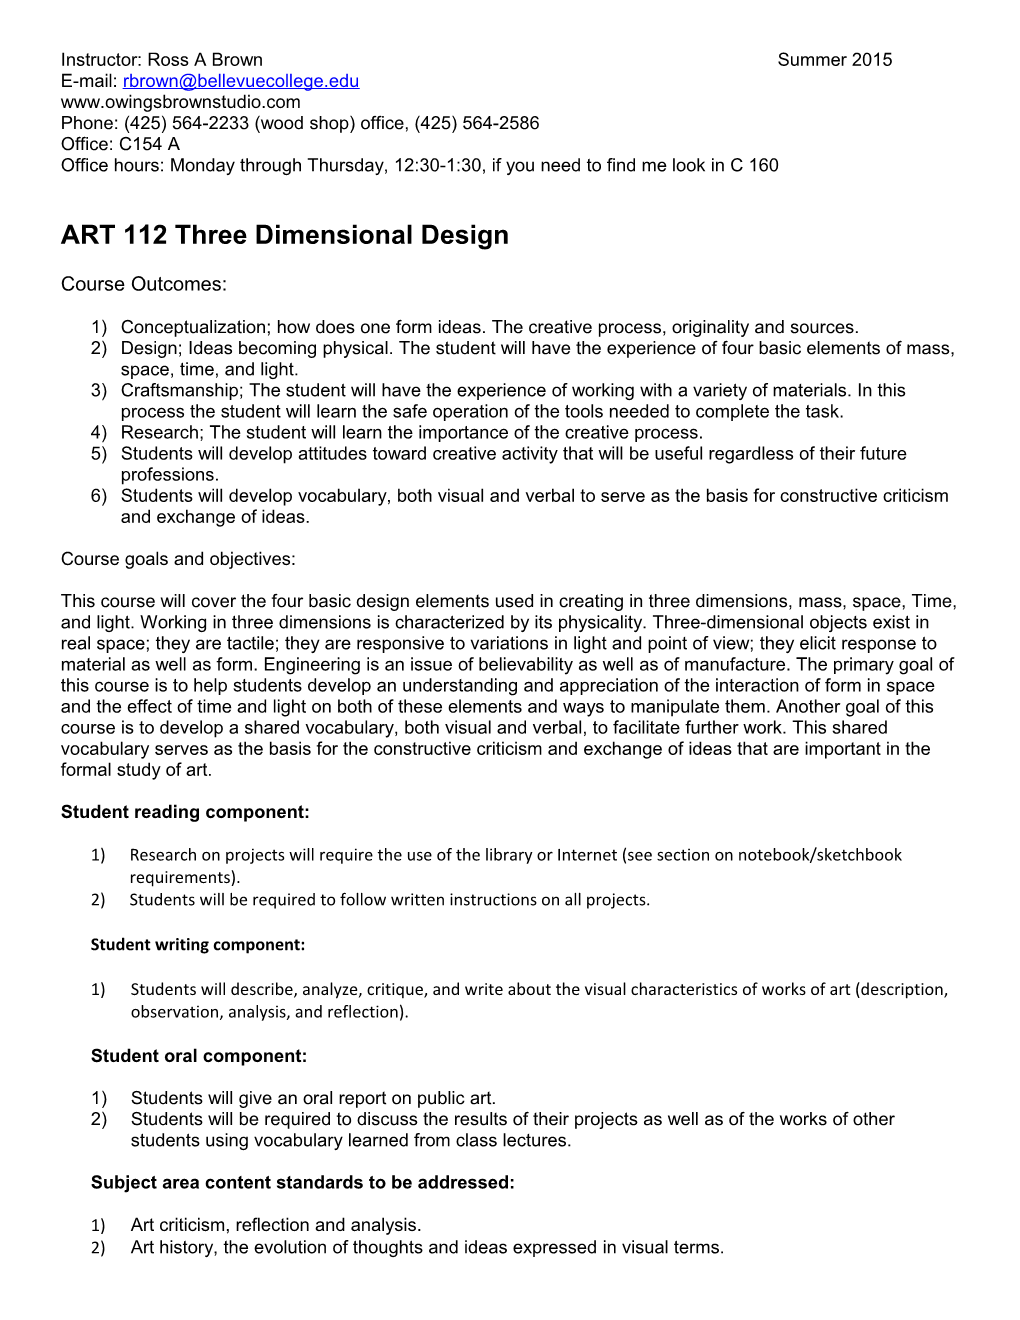 ART 112 Three Dimensional Design